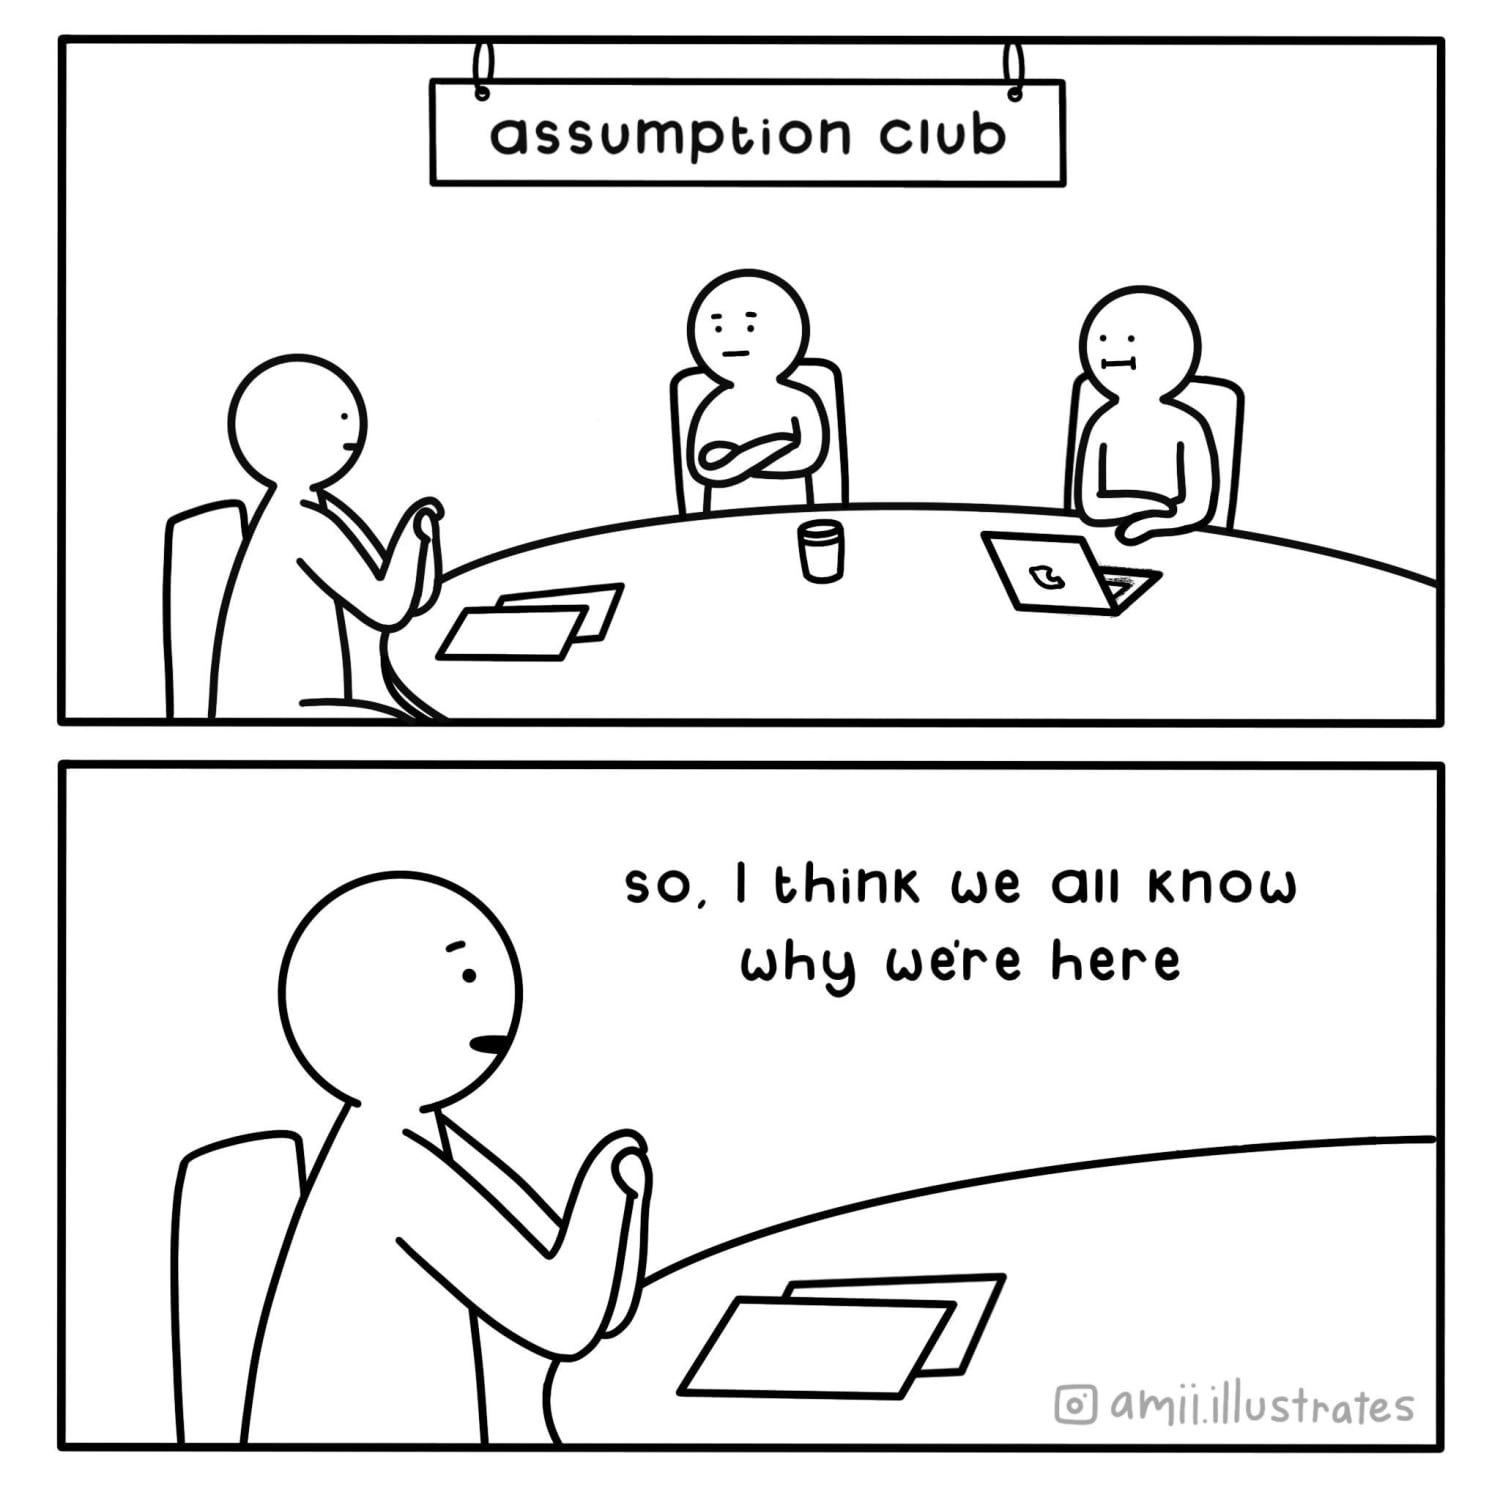 Assumption Club